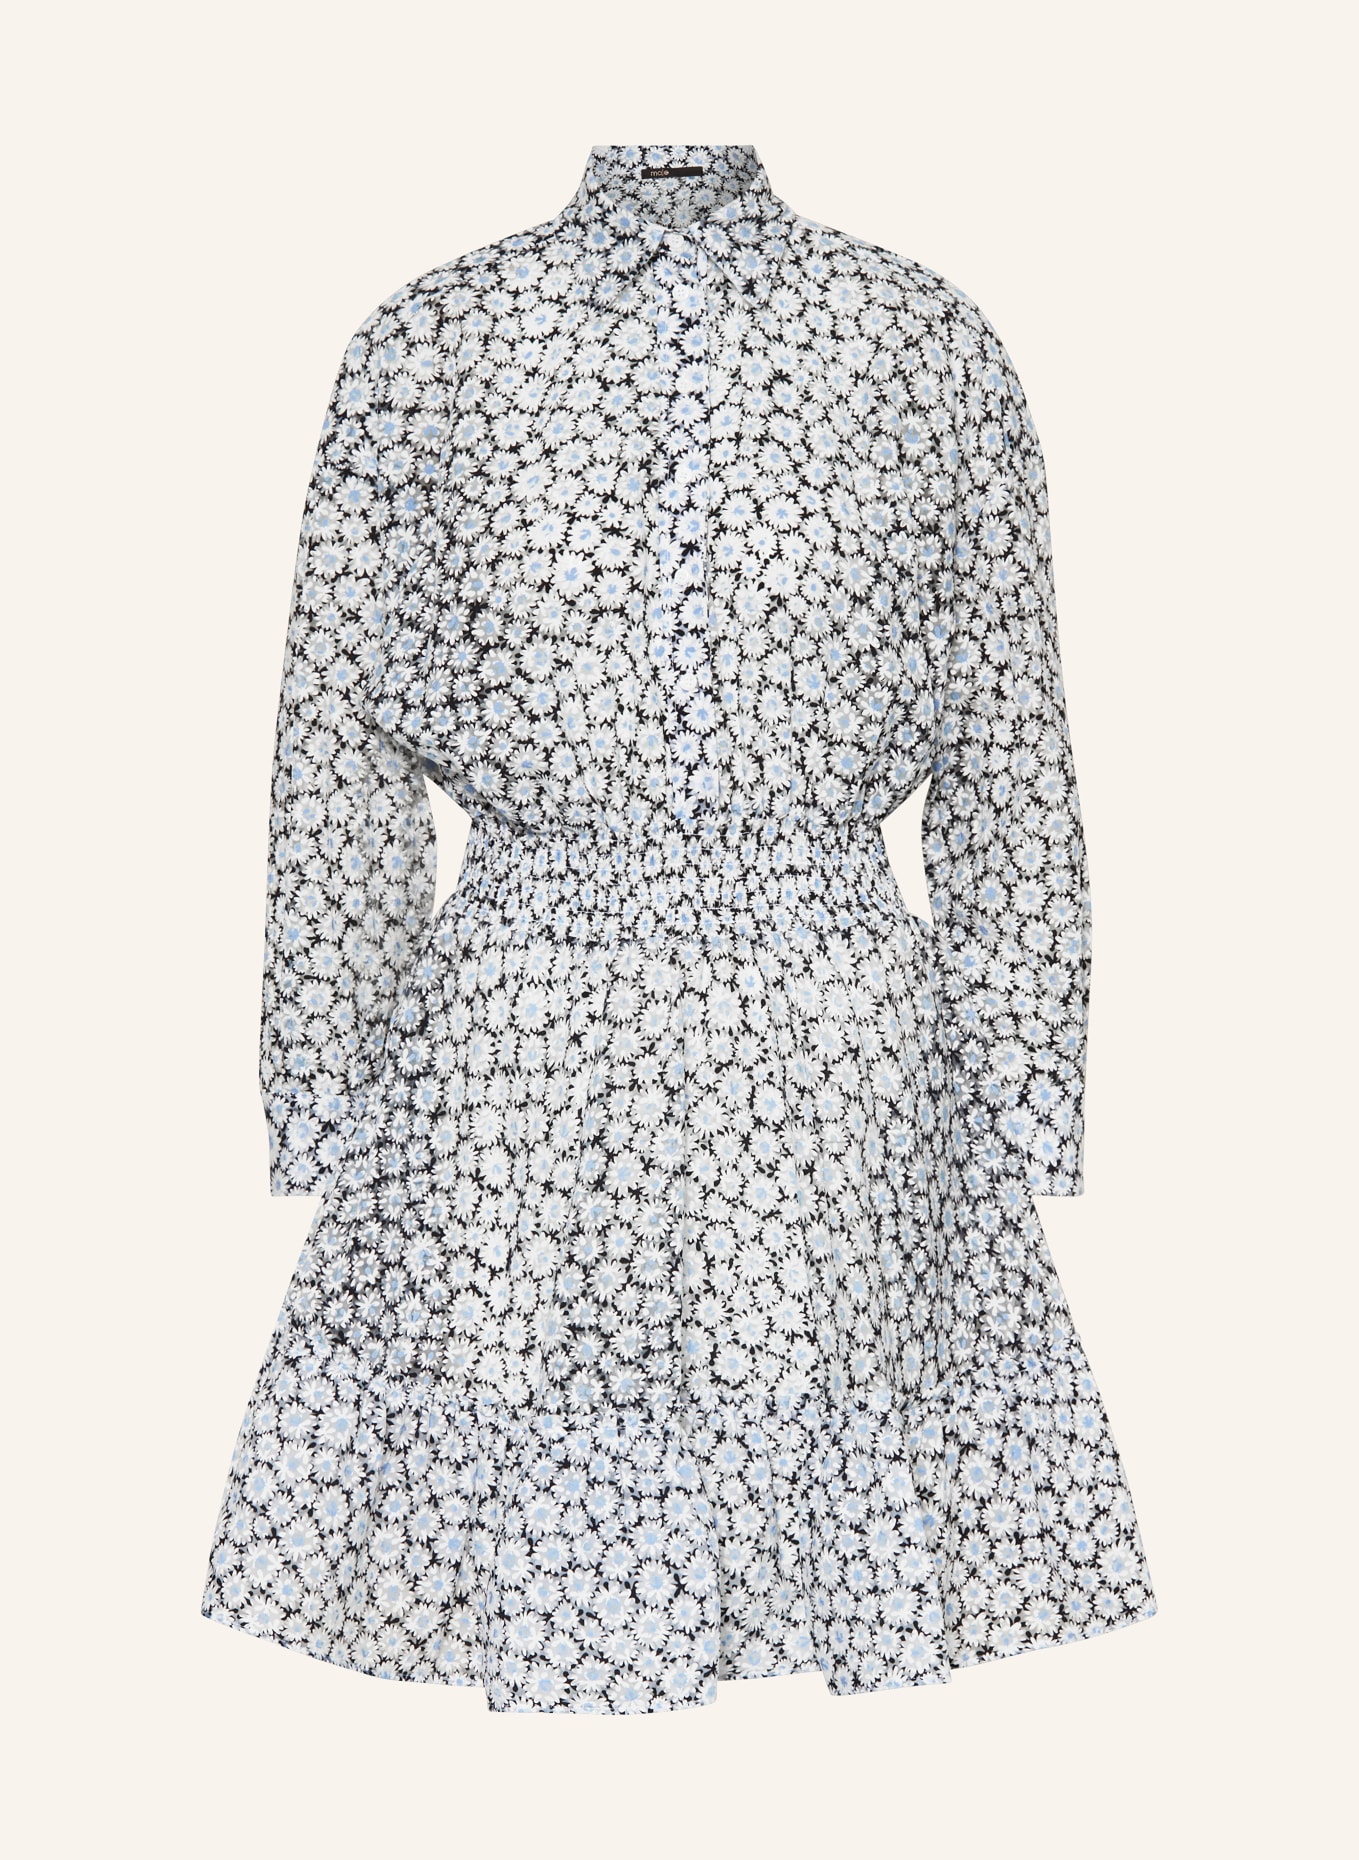 maje Kleid, Farbe: DUNKELBLAU/ WEISS (Bild 1)